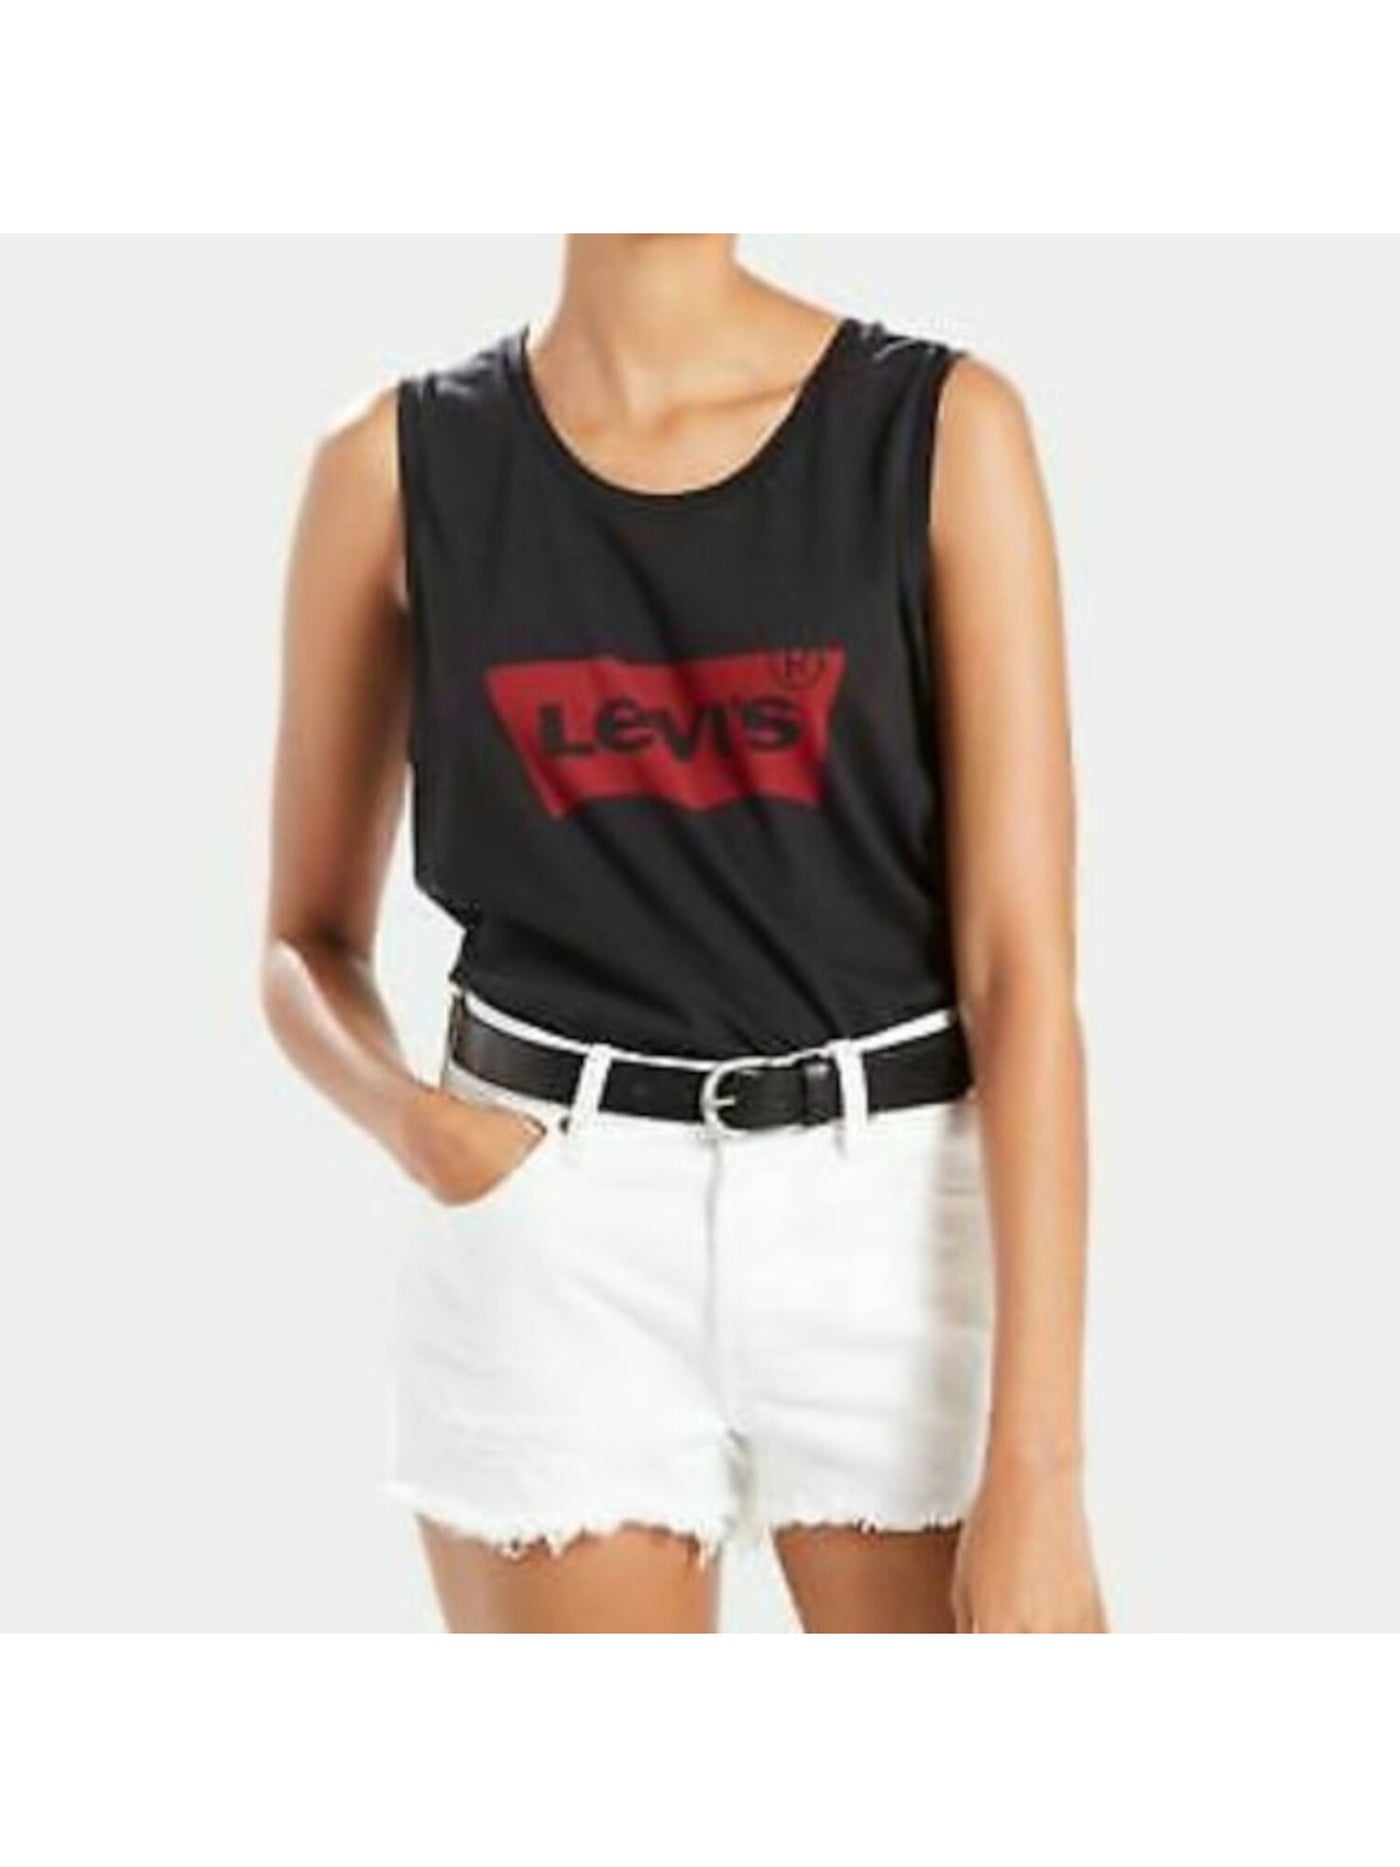 LEVIS Womens Black Stretch Logo Graphic Sleeveless Scoop Neck Top XL